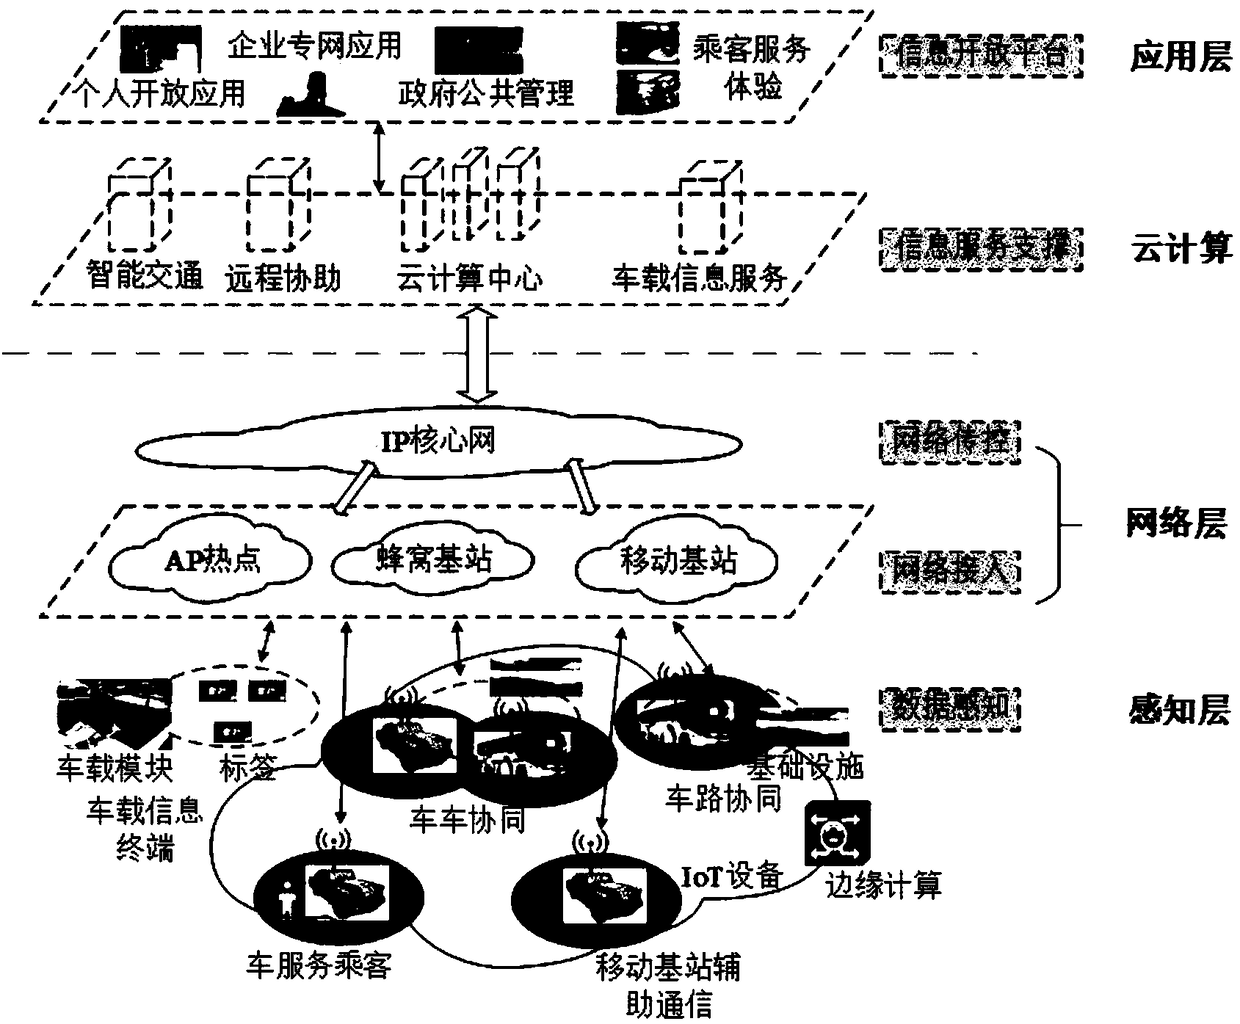 Intelligent connected vehicle (ICV) communication network architecture based on vehicle-mounted base station